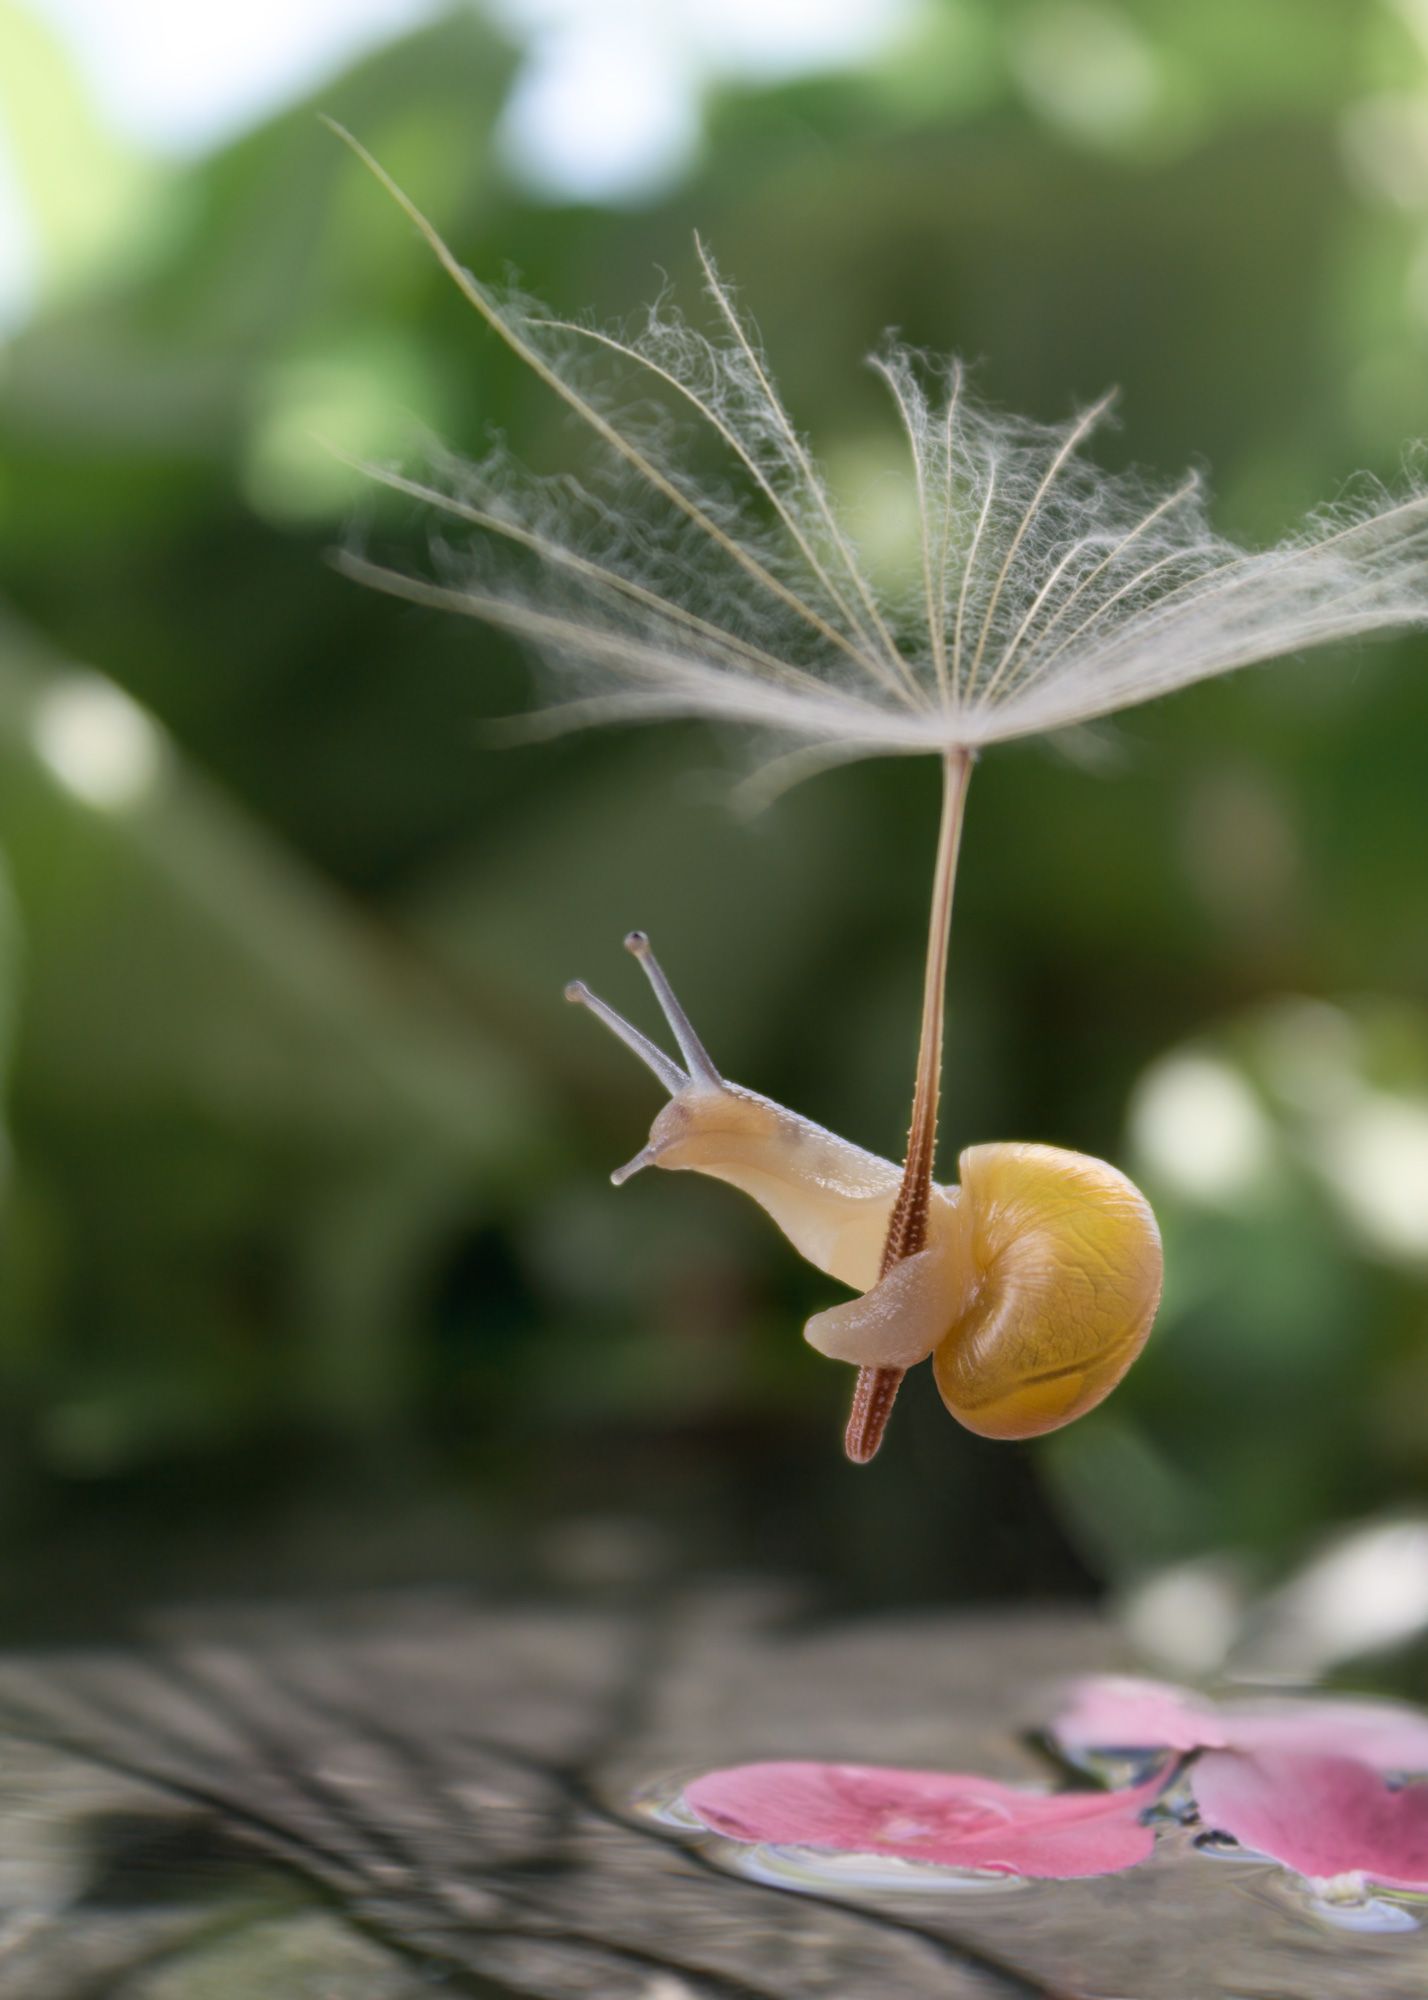 #snail #macro #dandelion #macrophotography #nature #wallpaper #макро, Вікторія Крулько